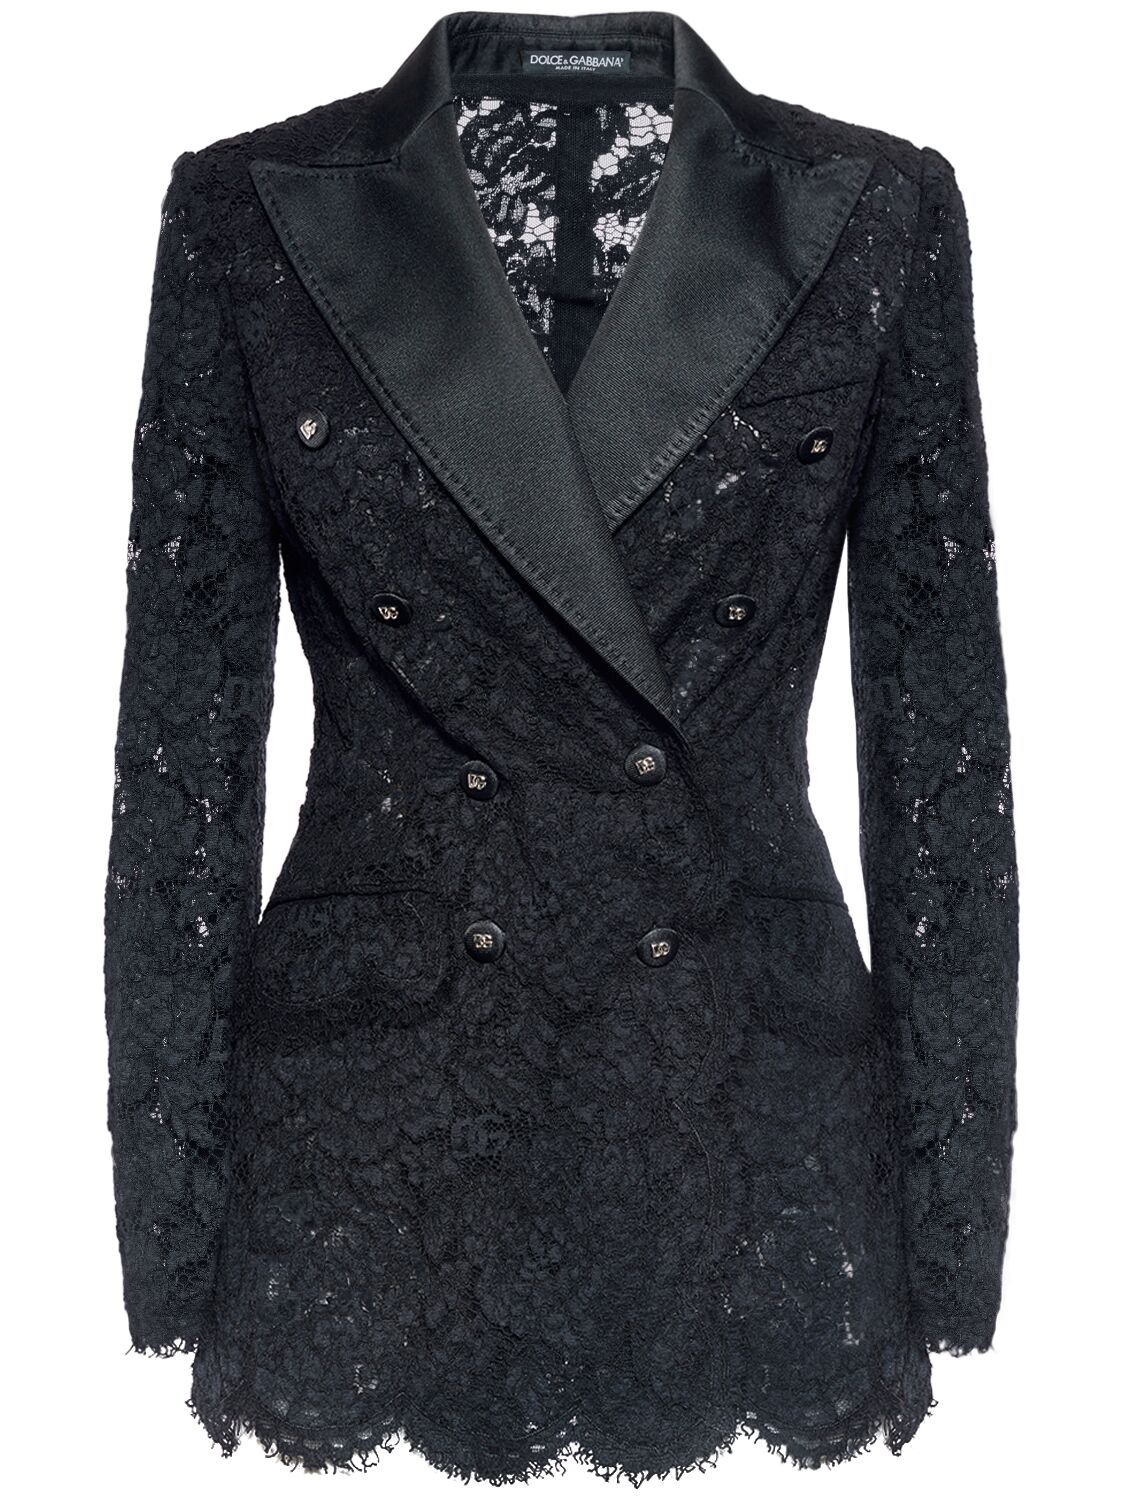 Image of Floral & Dg Lace Tuxedo Jacket